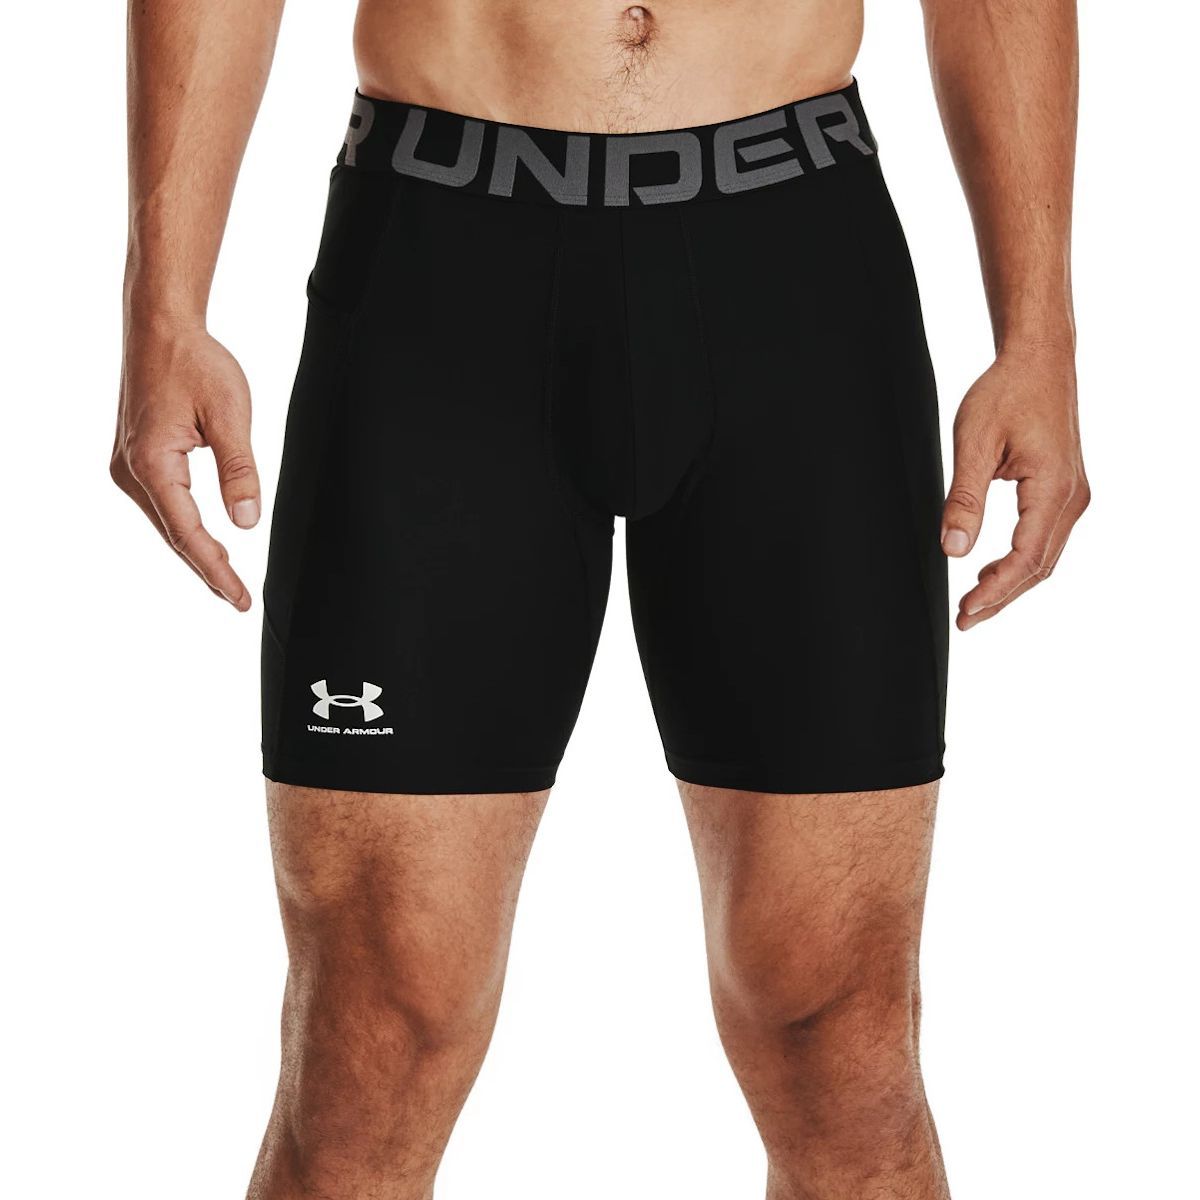 Under Armour HeatGear Men's Shorts